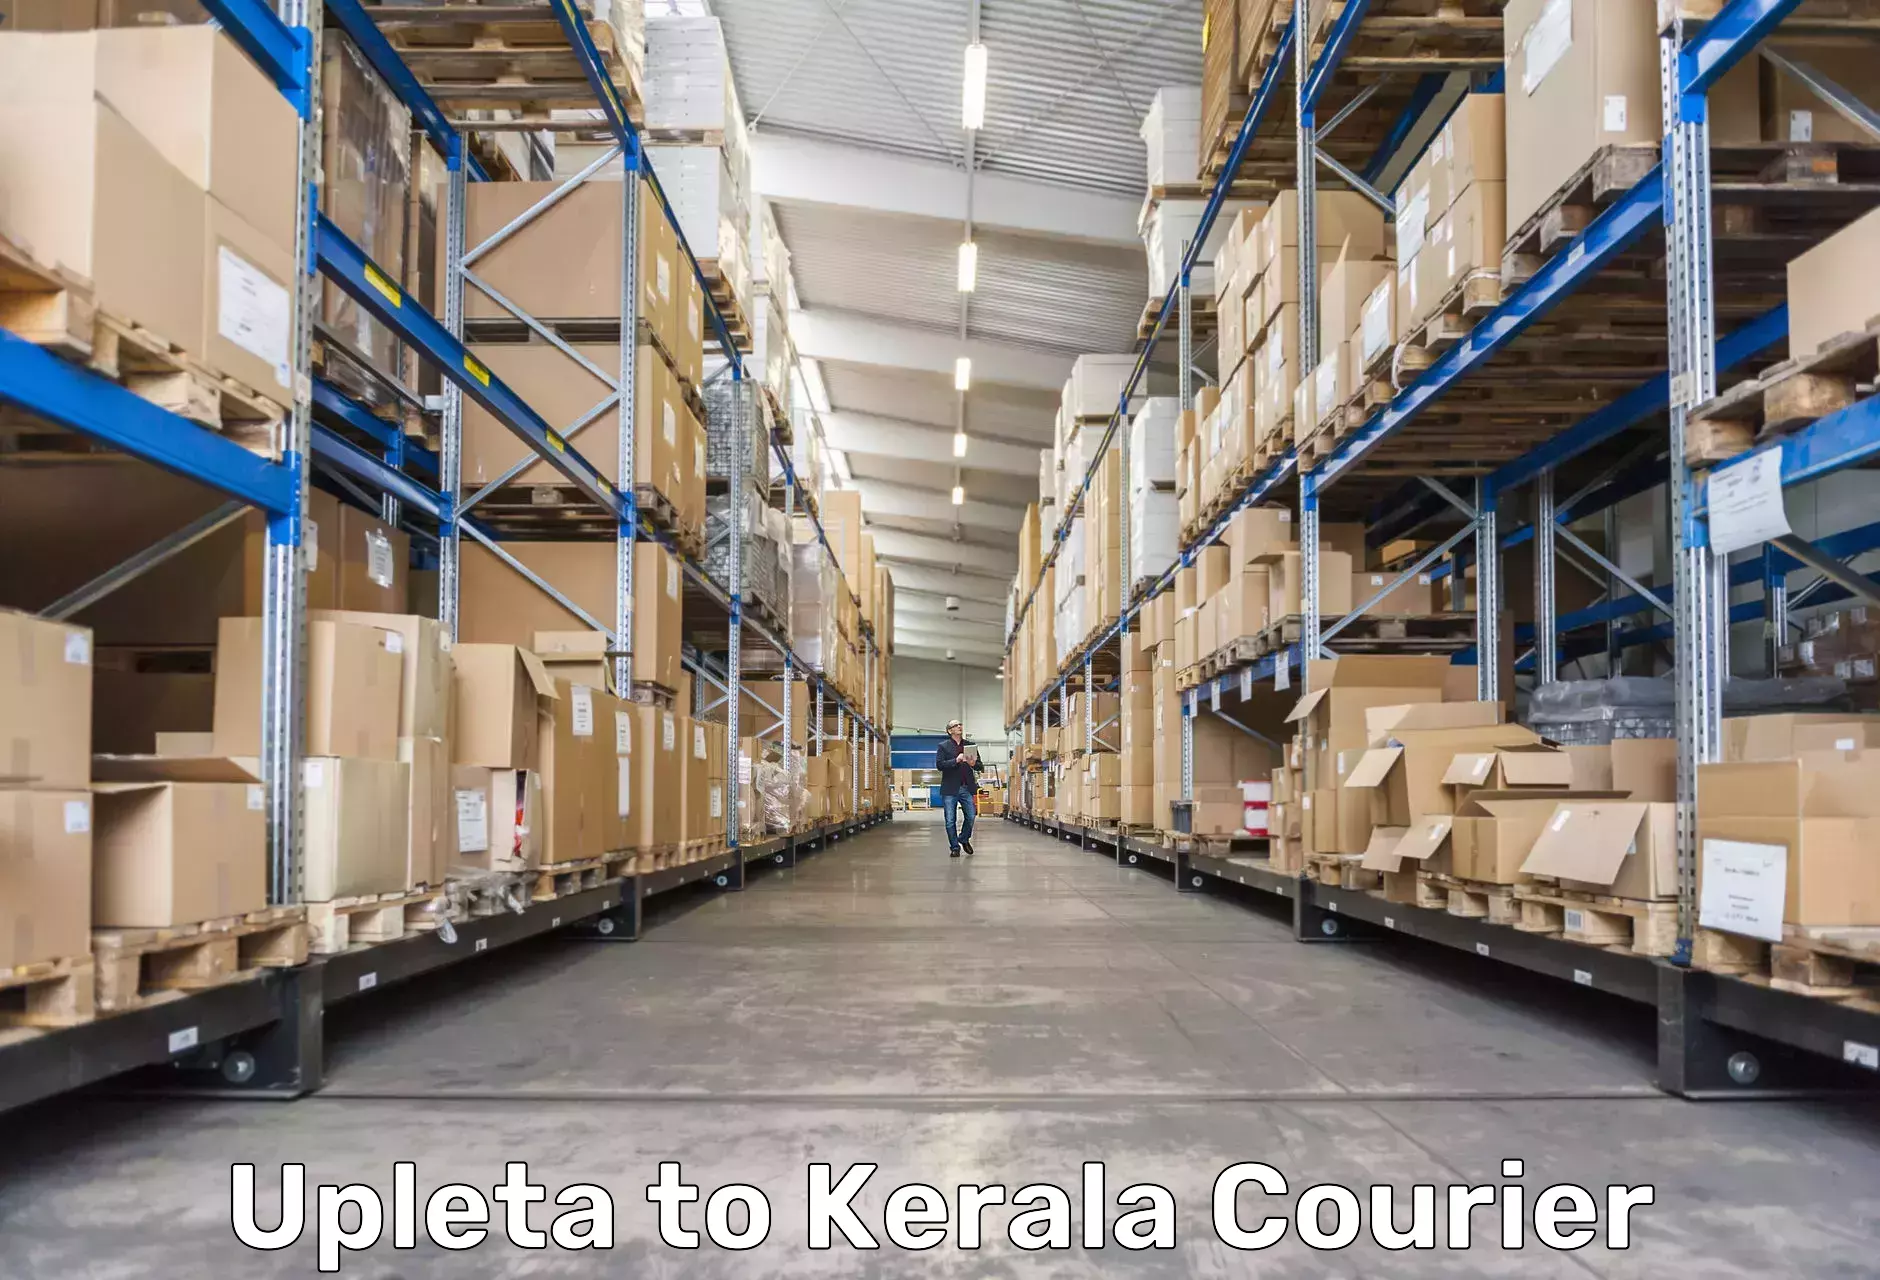 Urgent courier needs Upleta to Kerala